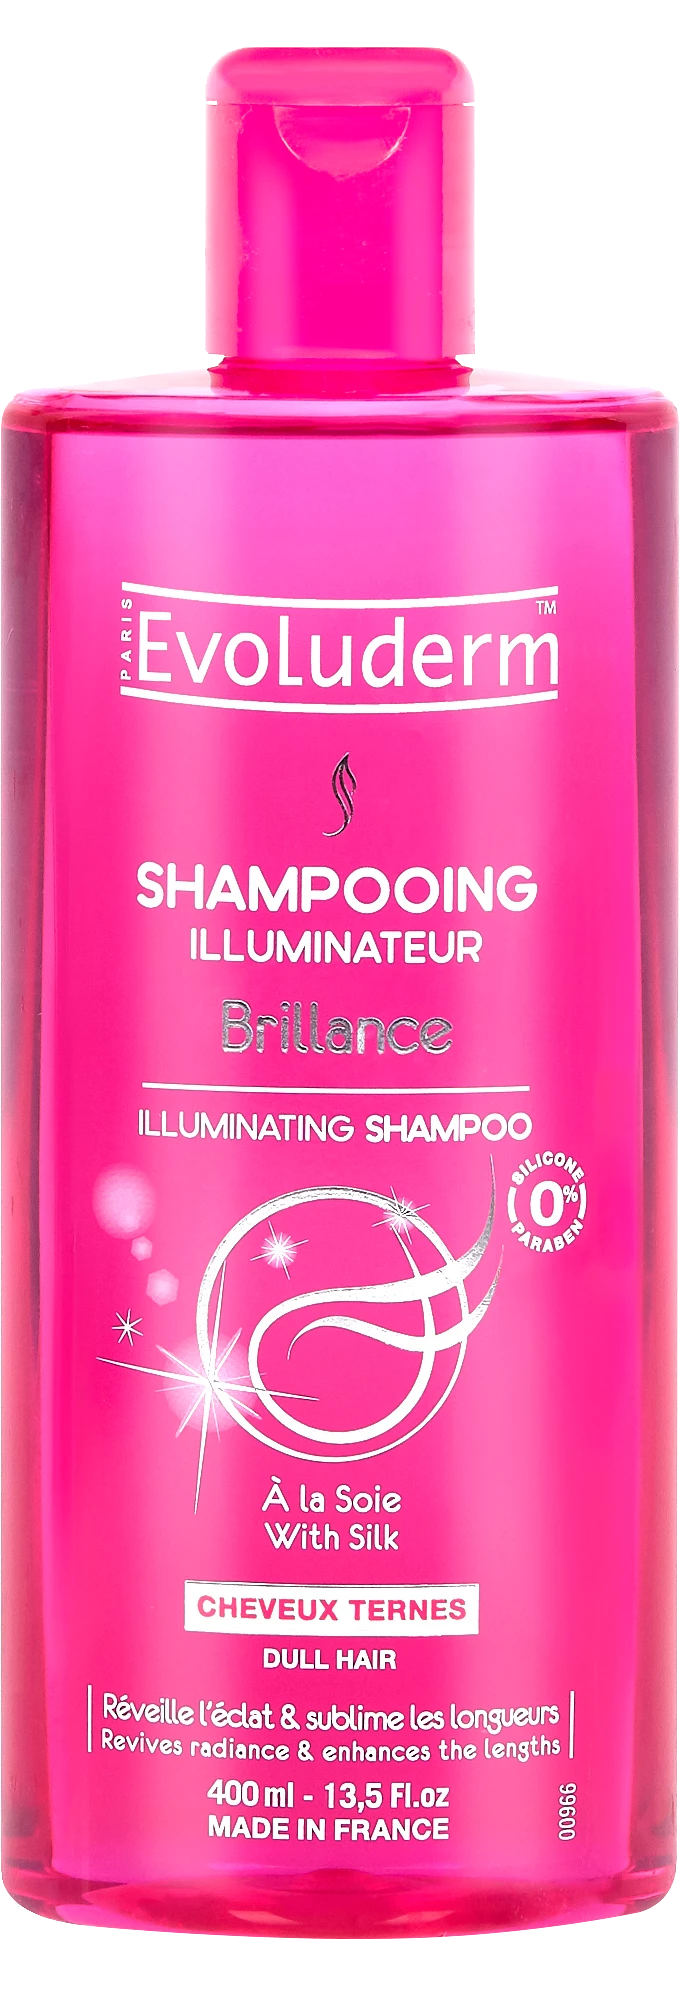 Shine Illuminating Shampoo, 400 ml - EVOLUDERM